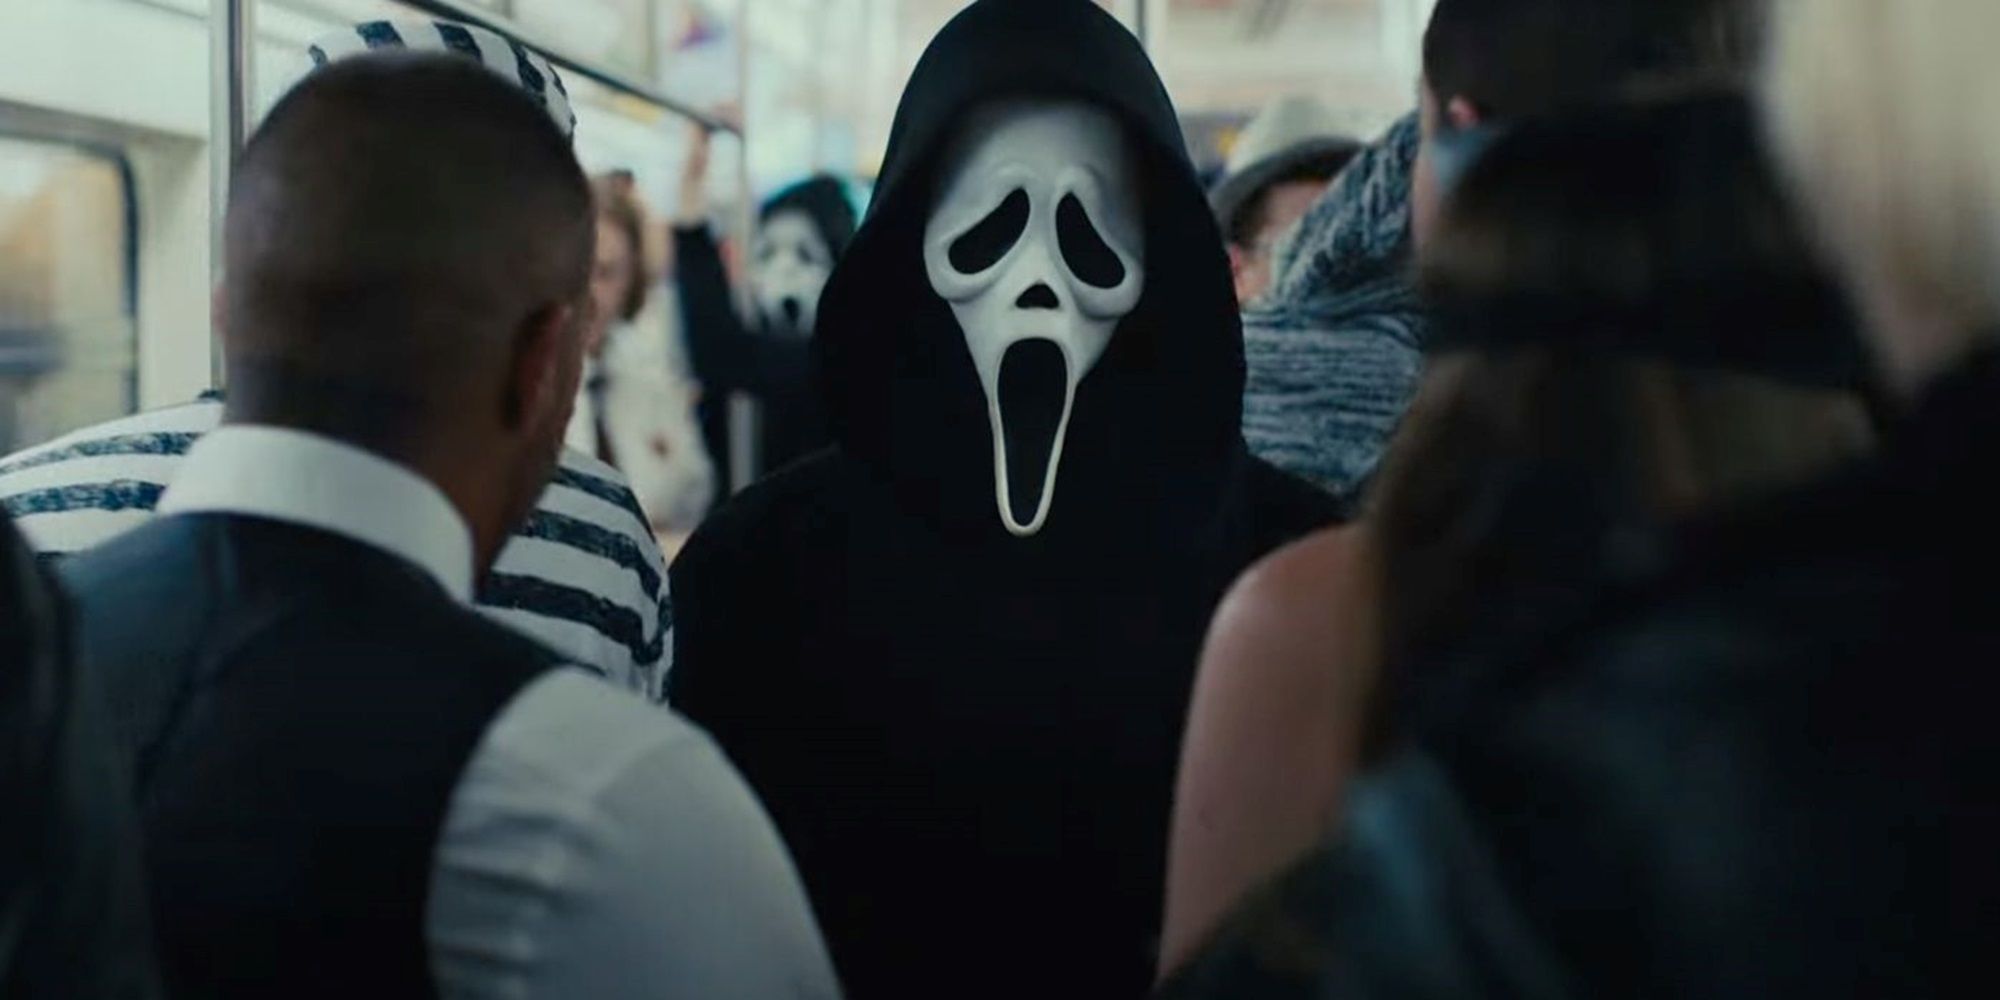 The ghost on the subway train in Scream VI